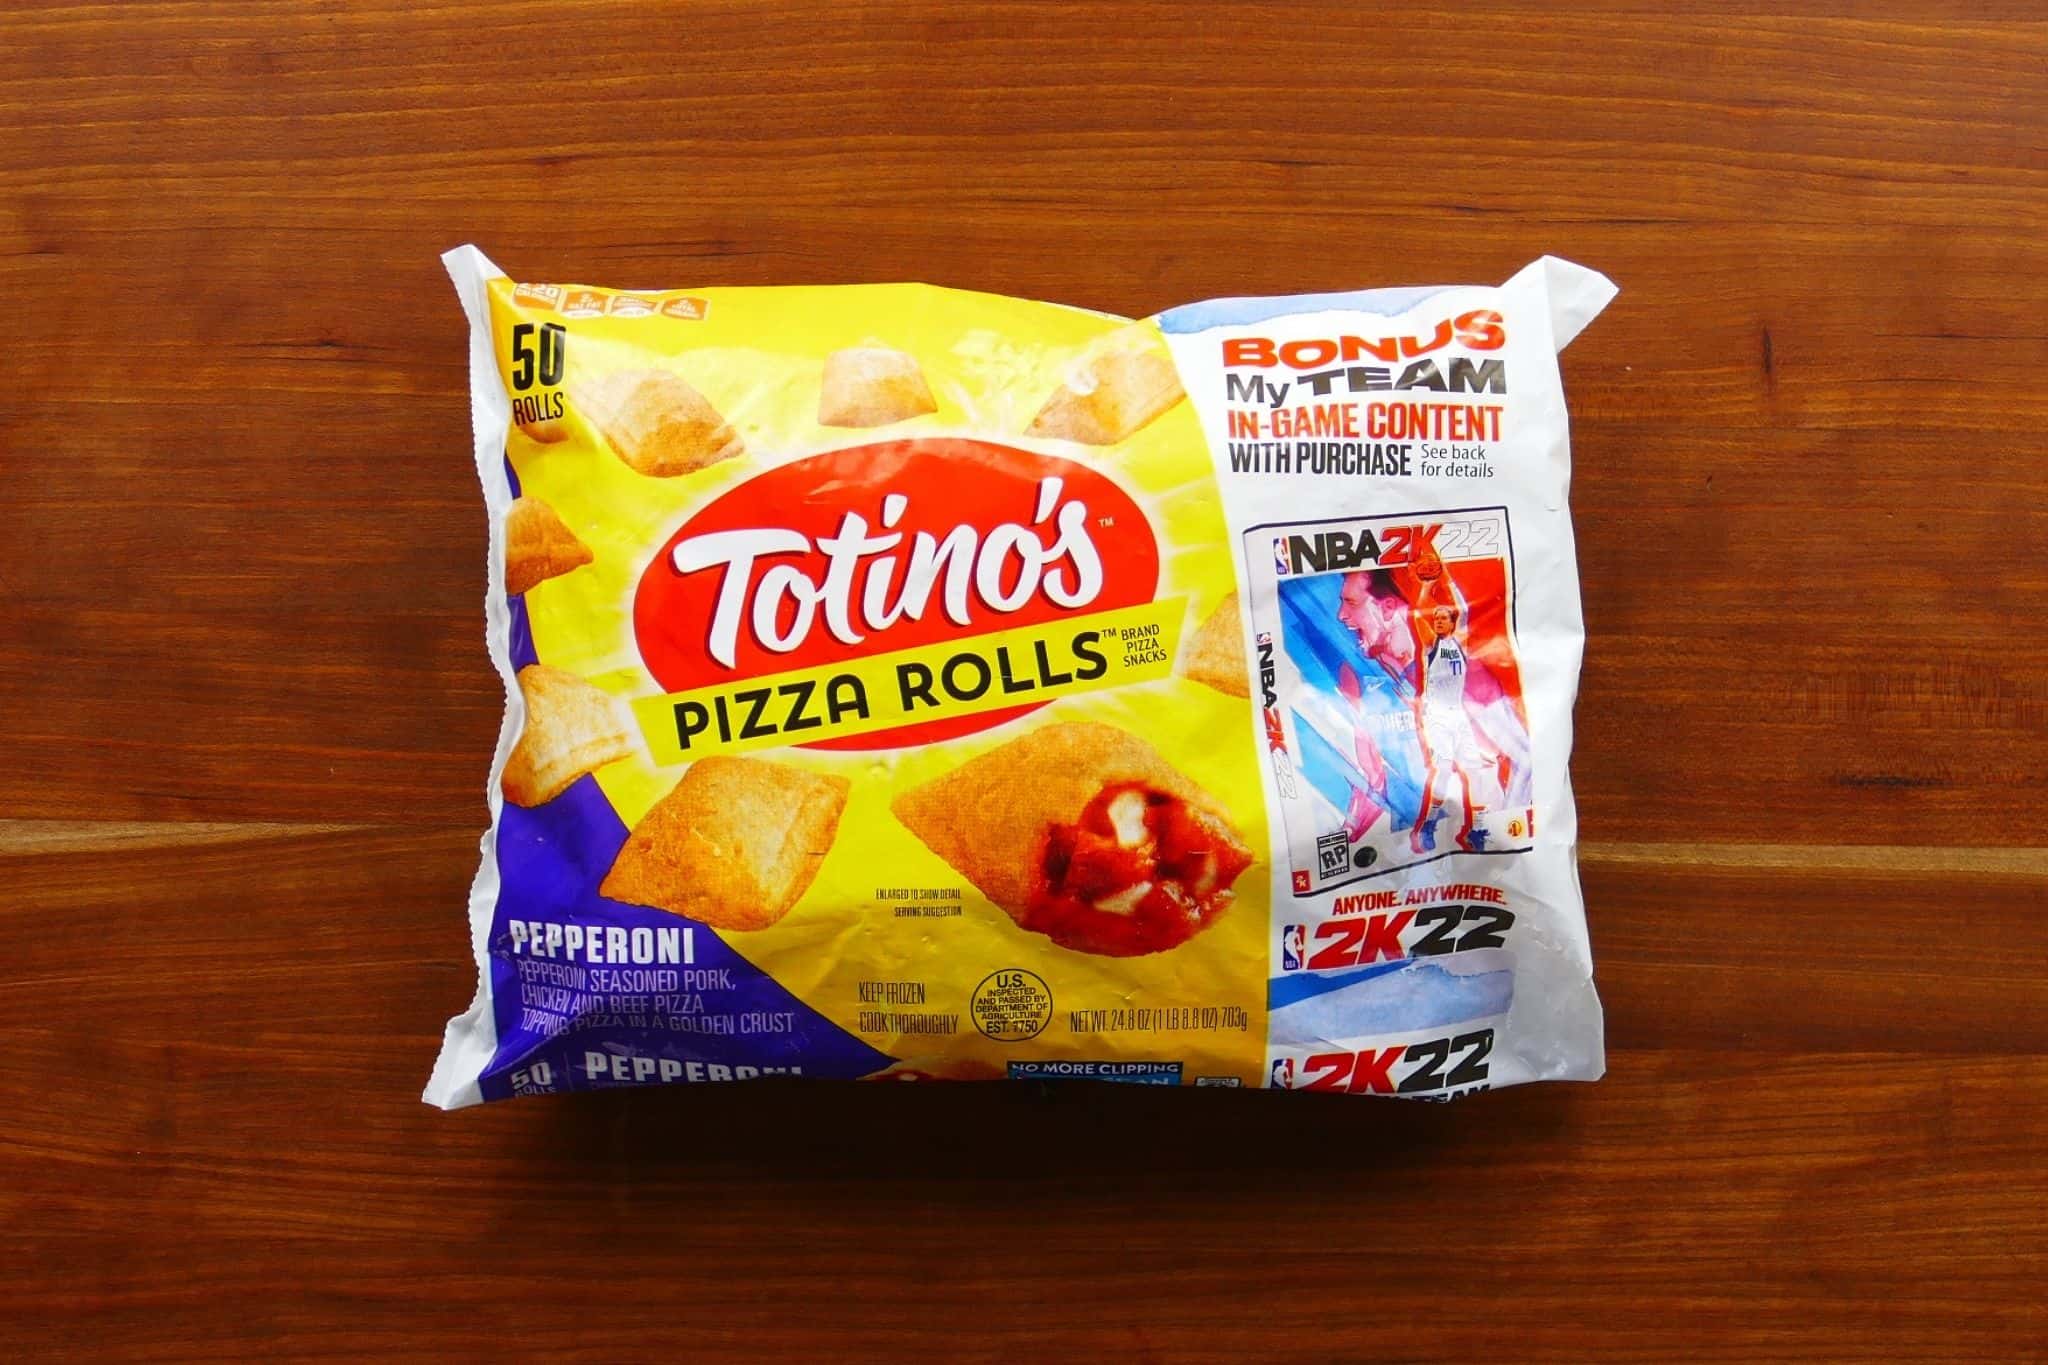 Totino's pizza rolls brand pizza snacks - pepperoni 50 rolls